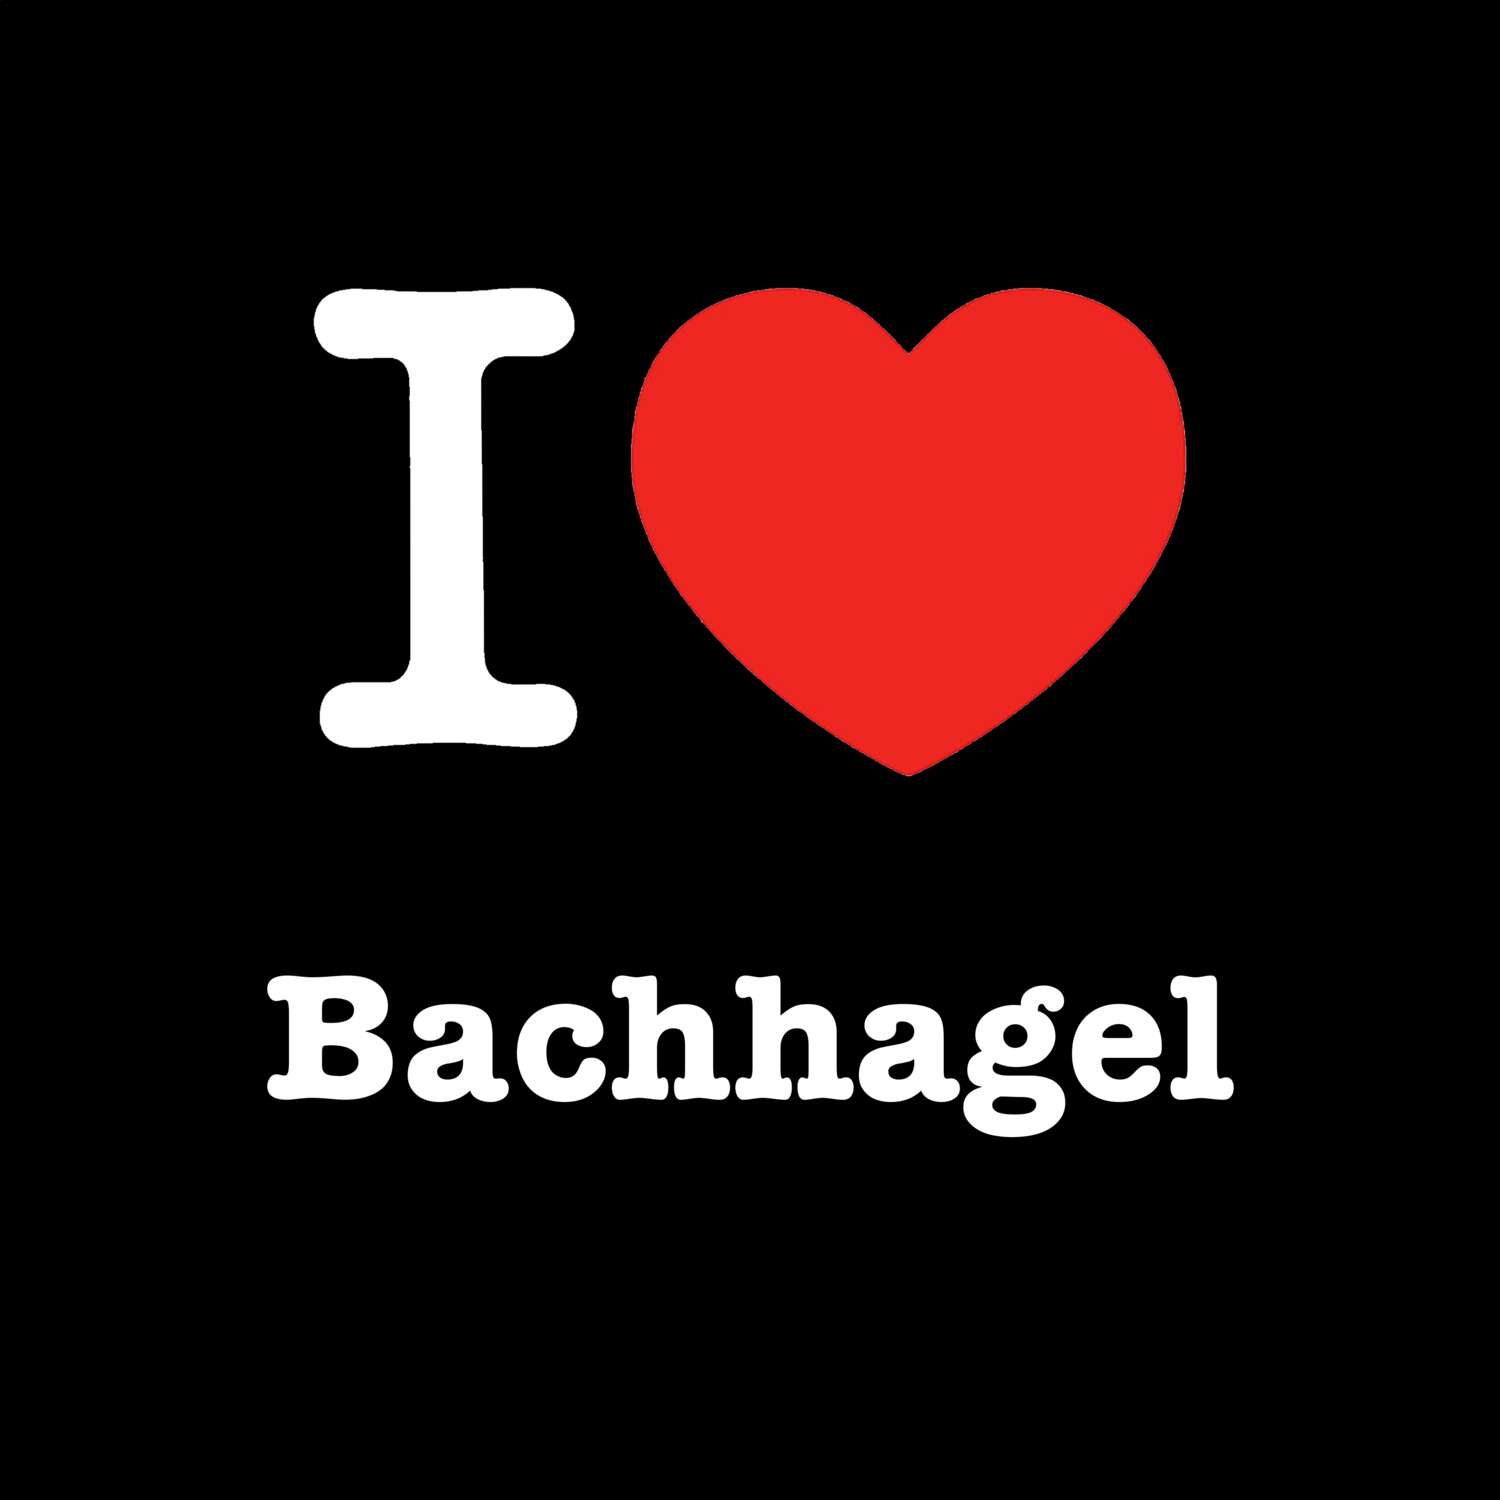 Bachhagel T-Shirt »I love«